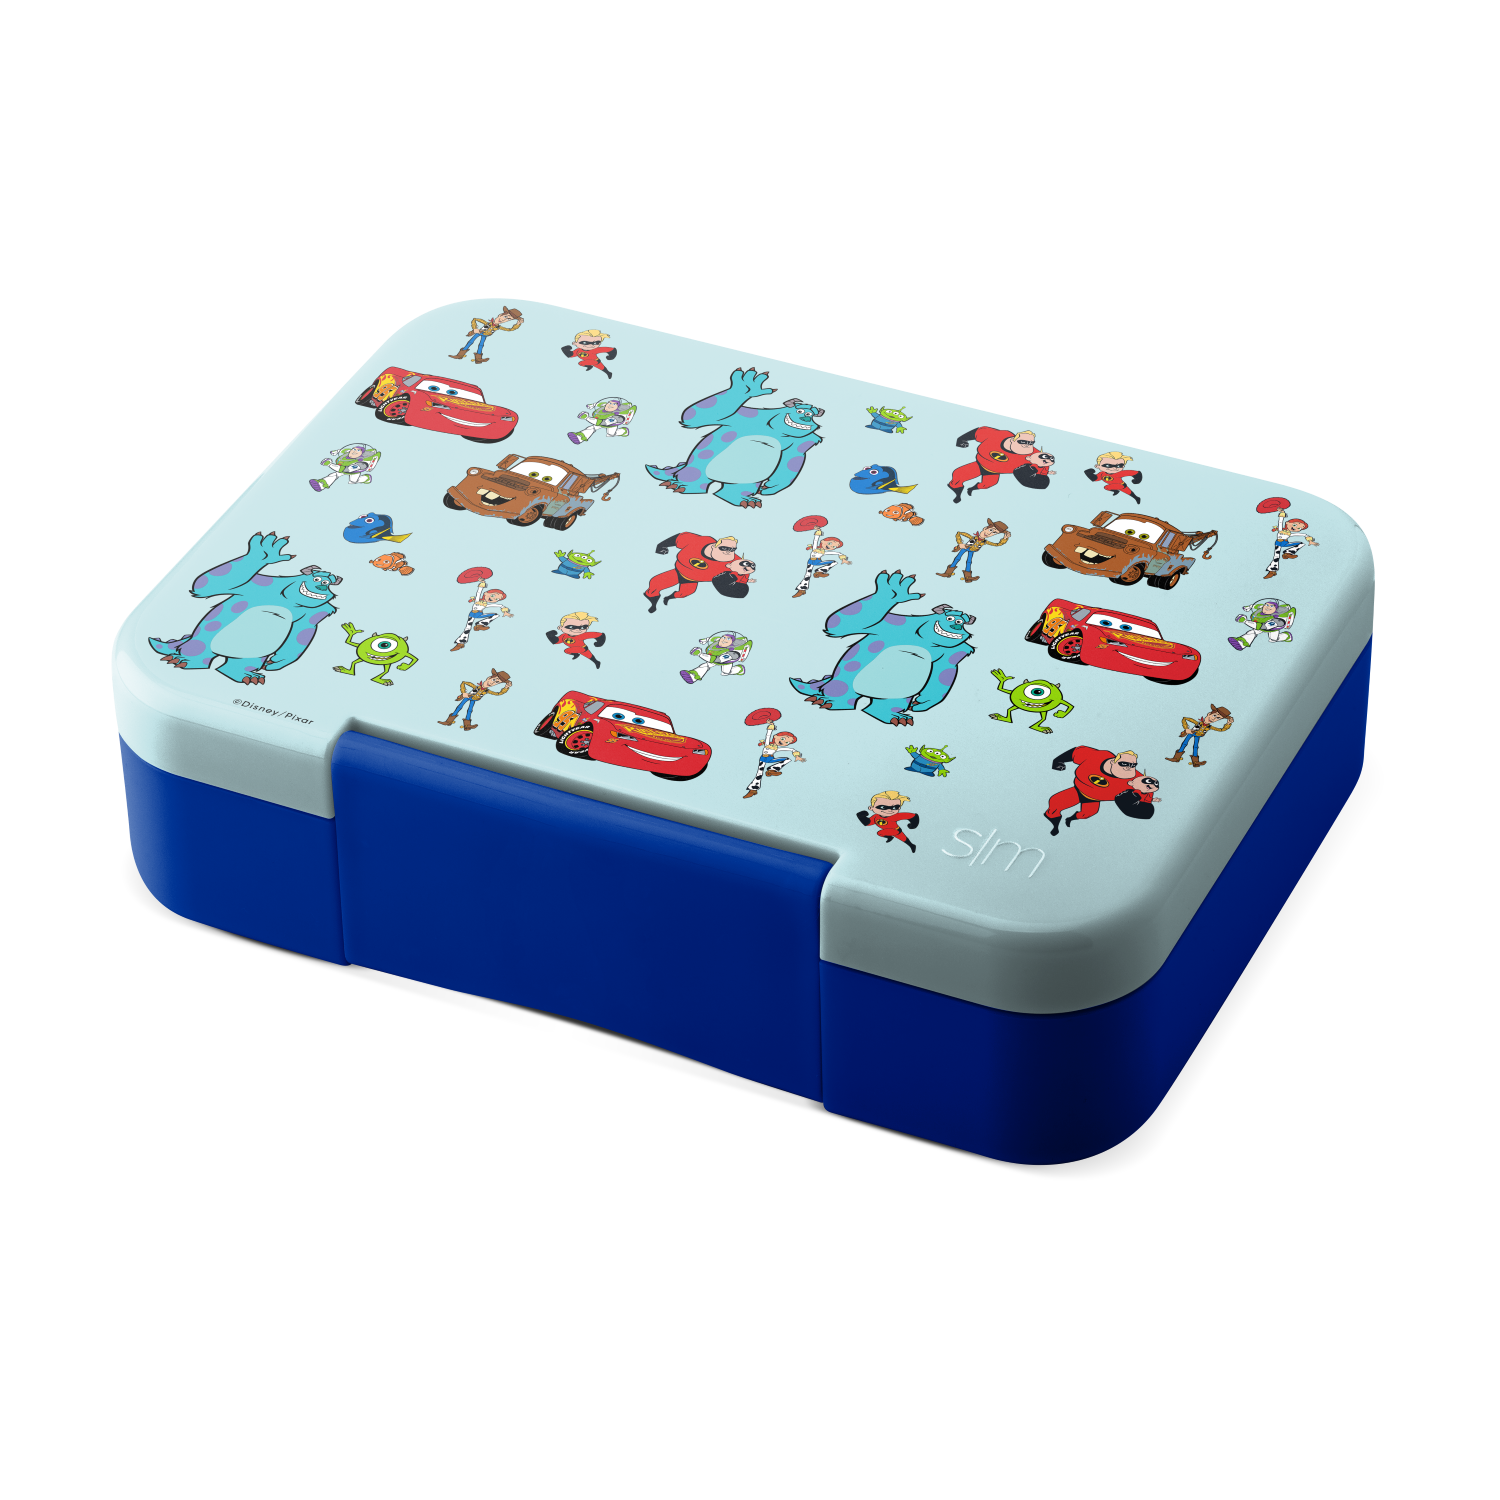  Simple Modern Disney Pixar Bento Lunch Box for Kids